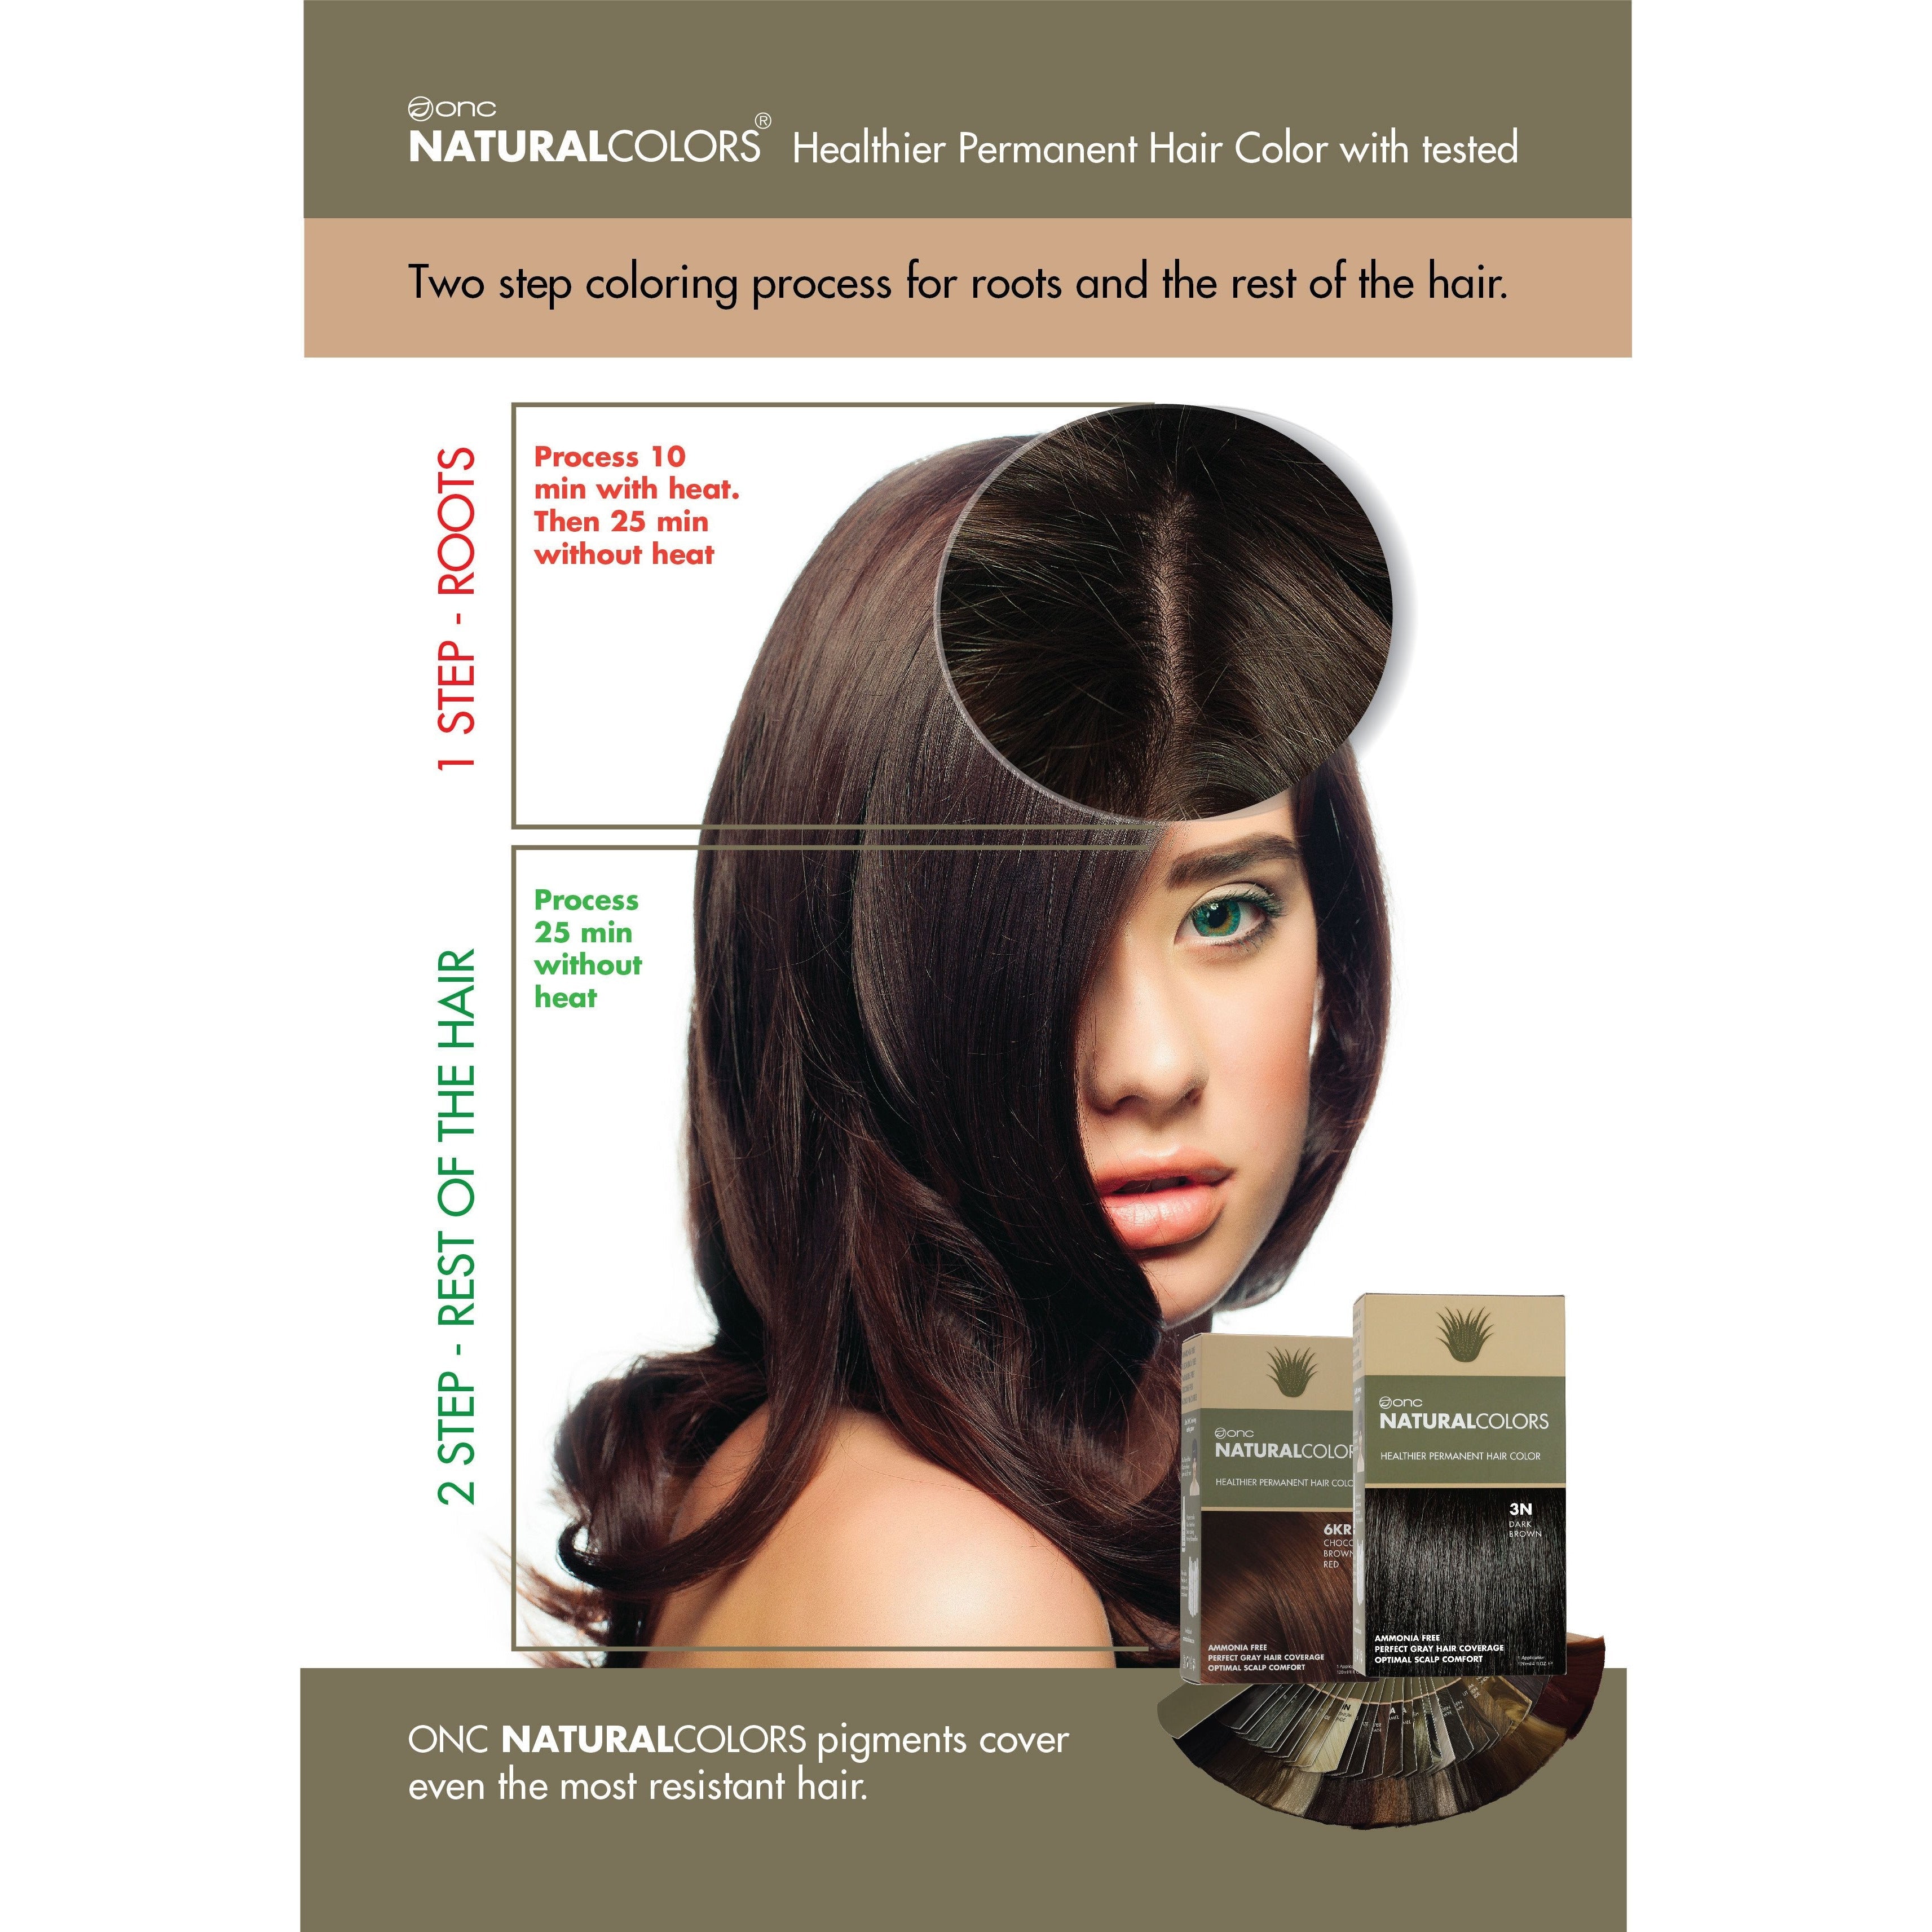 4M Medium Mahogany Brown Heat Activated Hair Dye With Organic Ingredients 120 ml - (4 fl. oz)